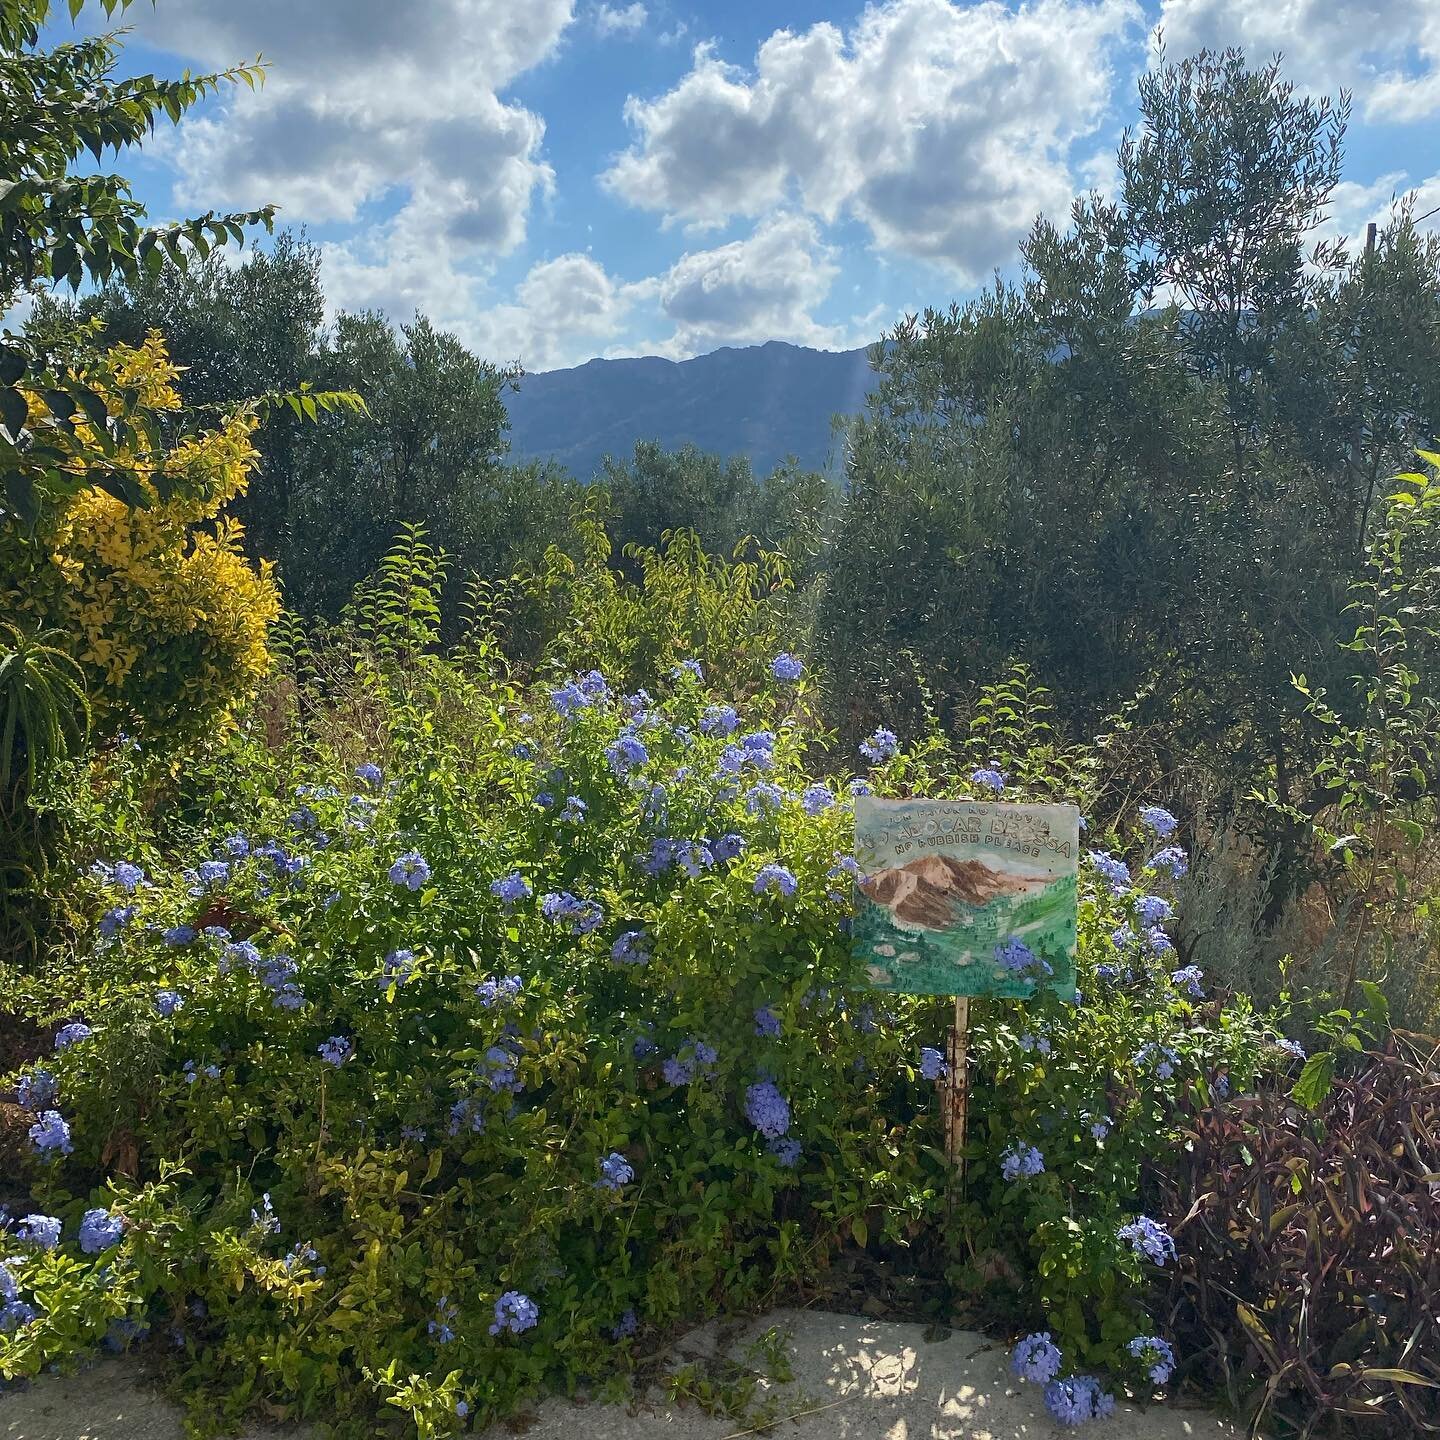 La Vall - Vista desde La Carroja. Esta ma&ntilde;ana. View from La Carroja. This morning.

#vallgallinera #lacarroja #naturelovers #marinaalta #alicantegram #turismorural #mountainlovers